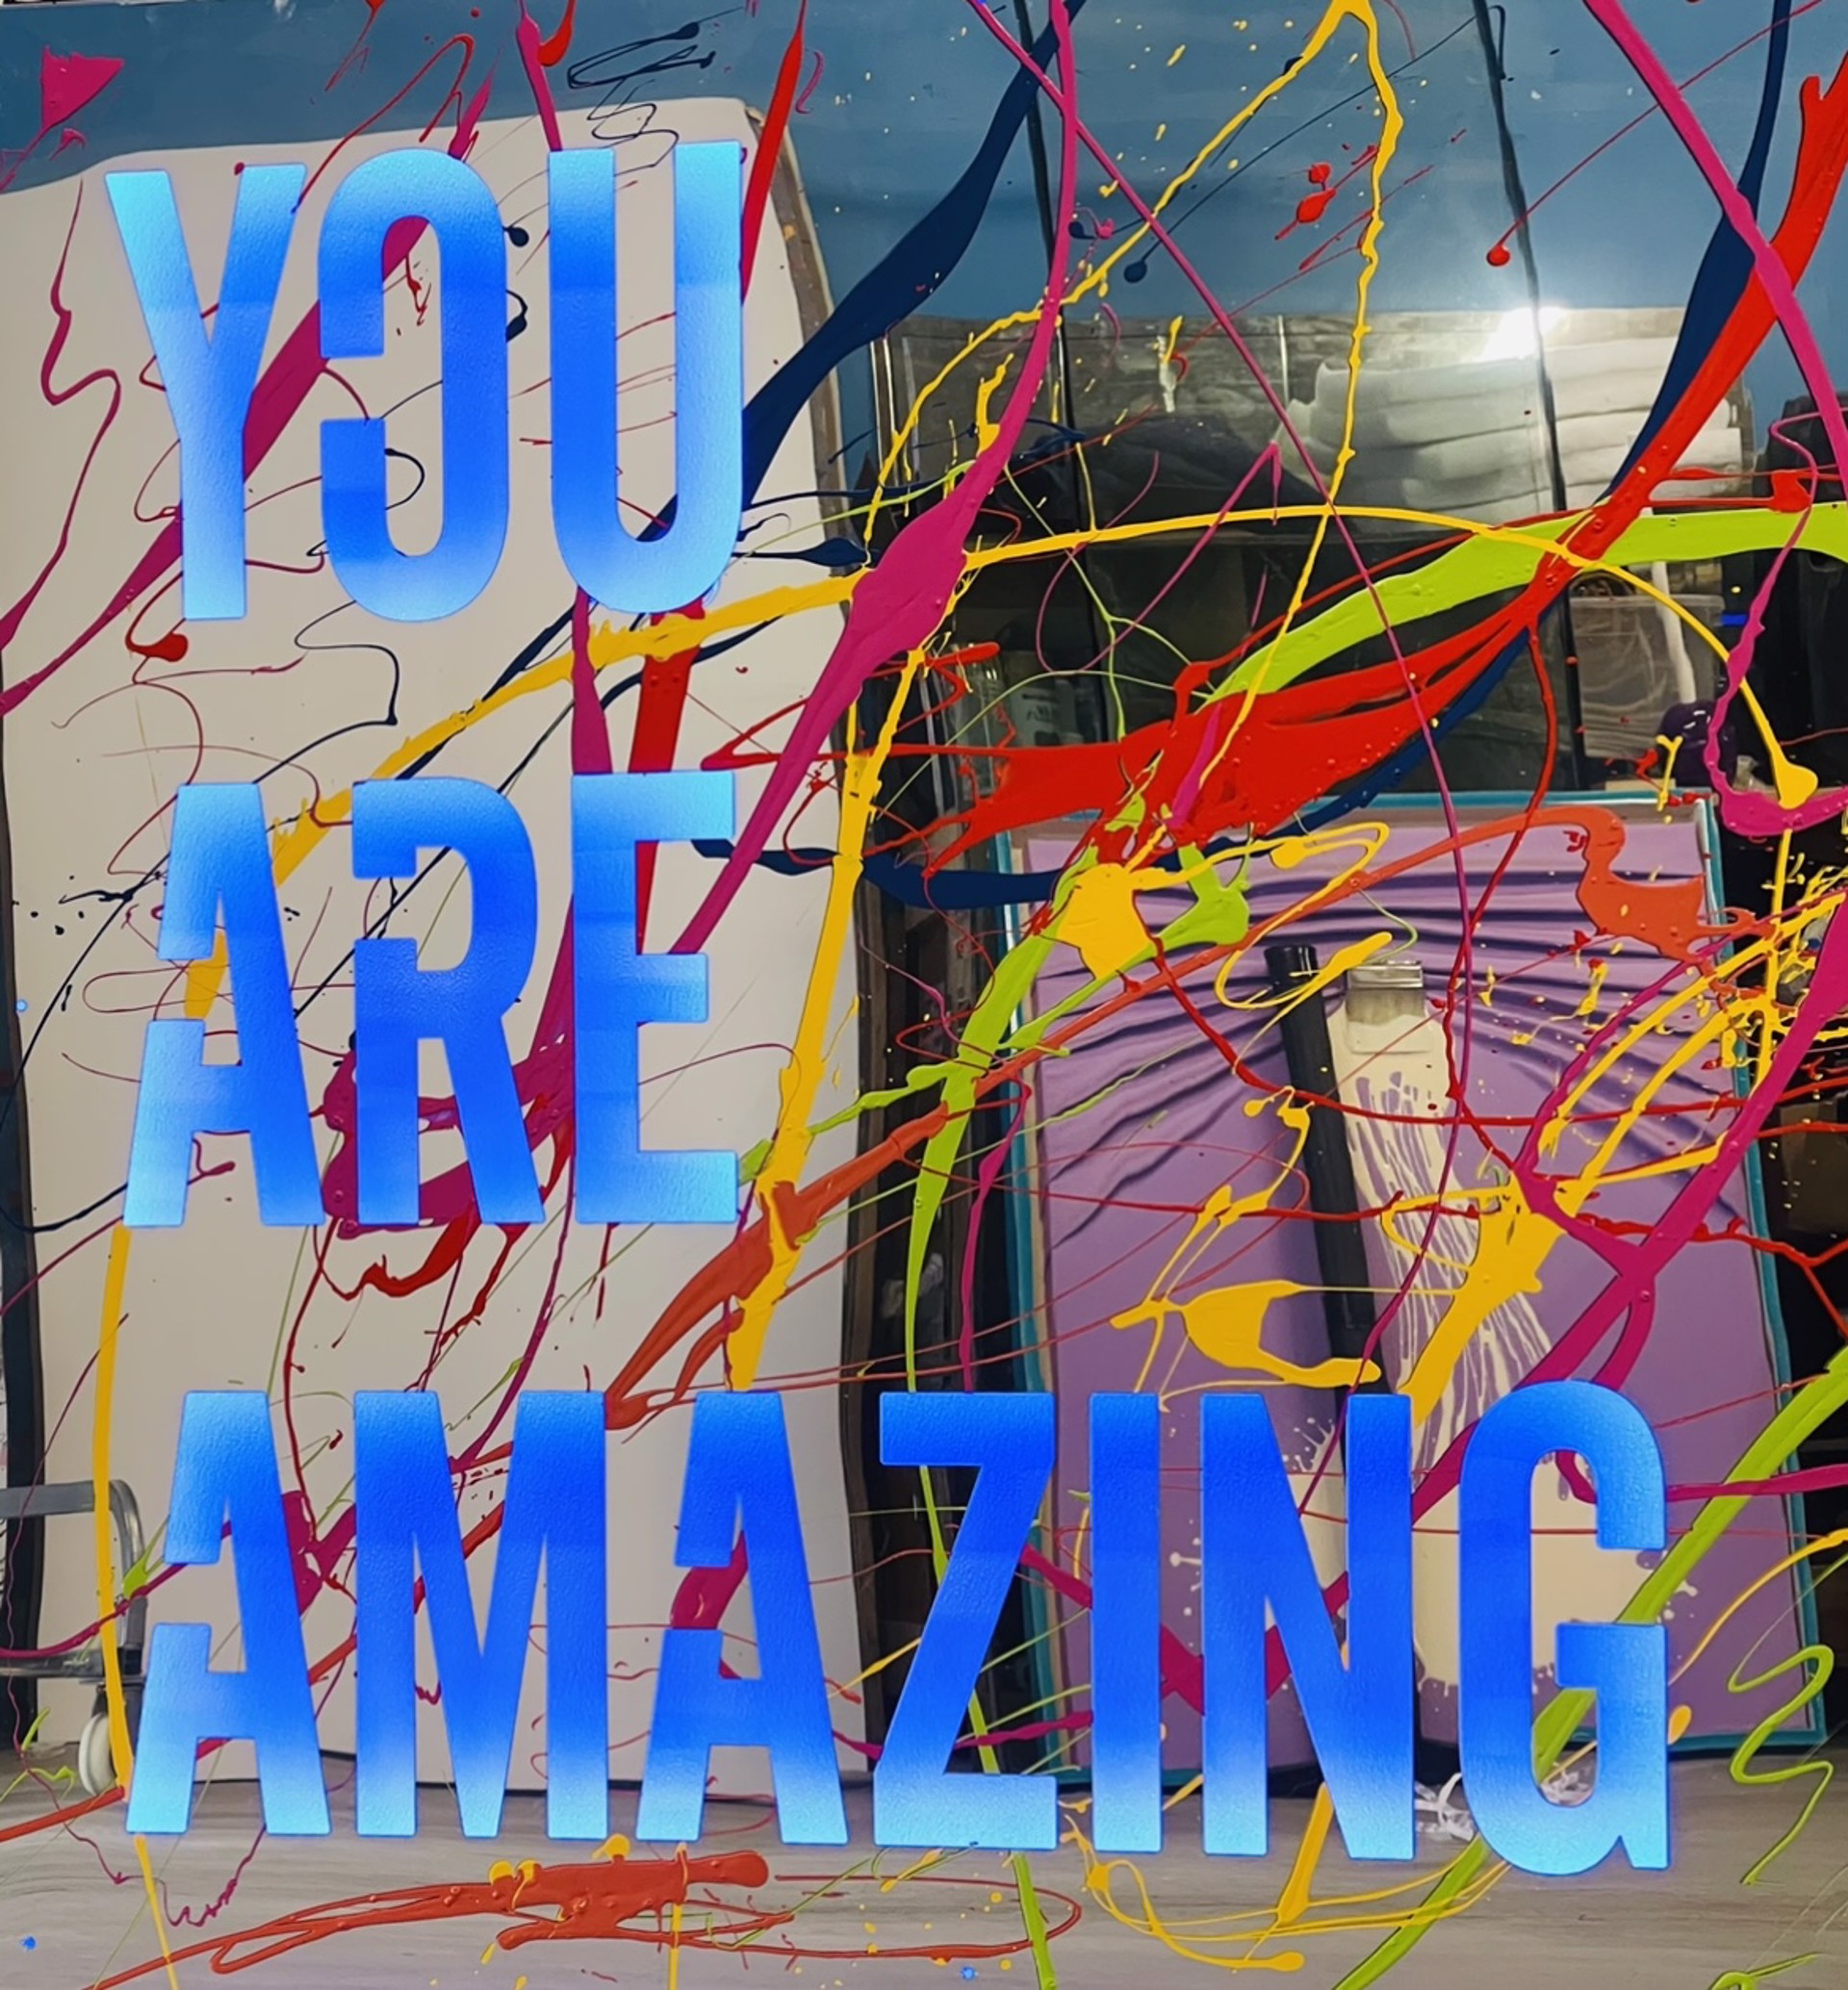 "You Are Amazing" by Affirmative Mirrors Installation by Elena Bulatova